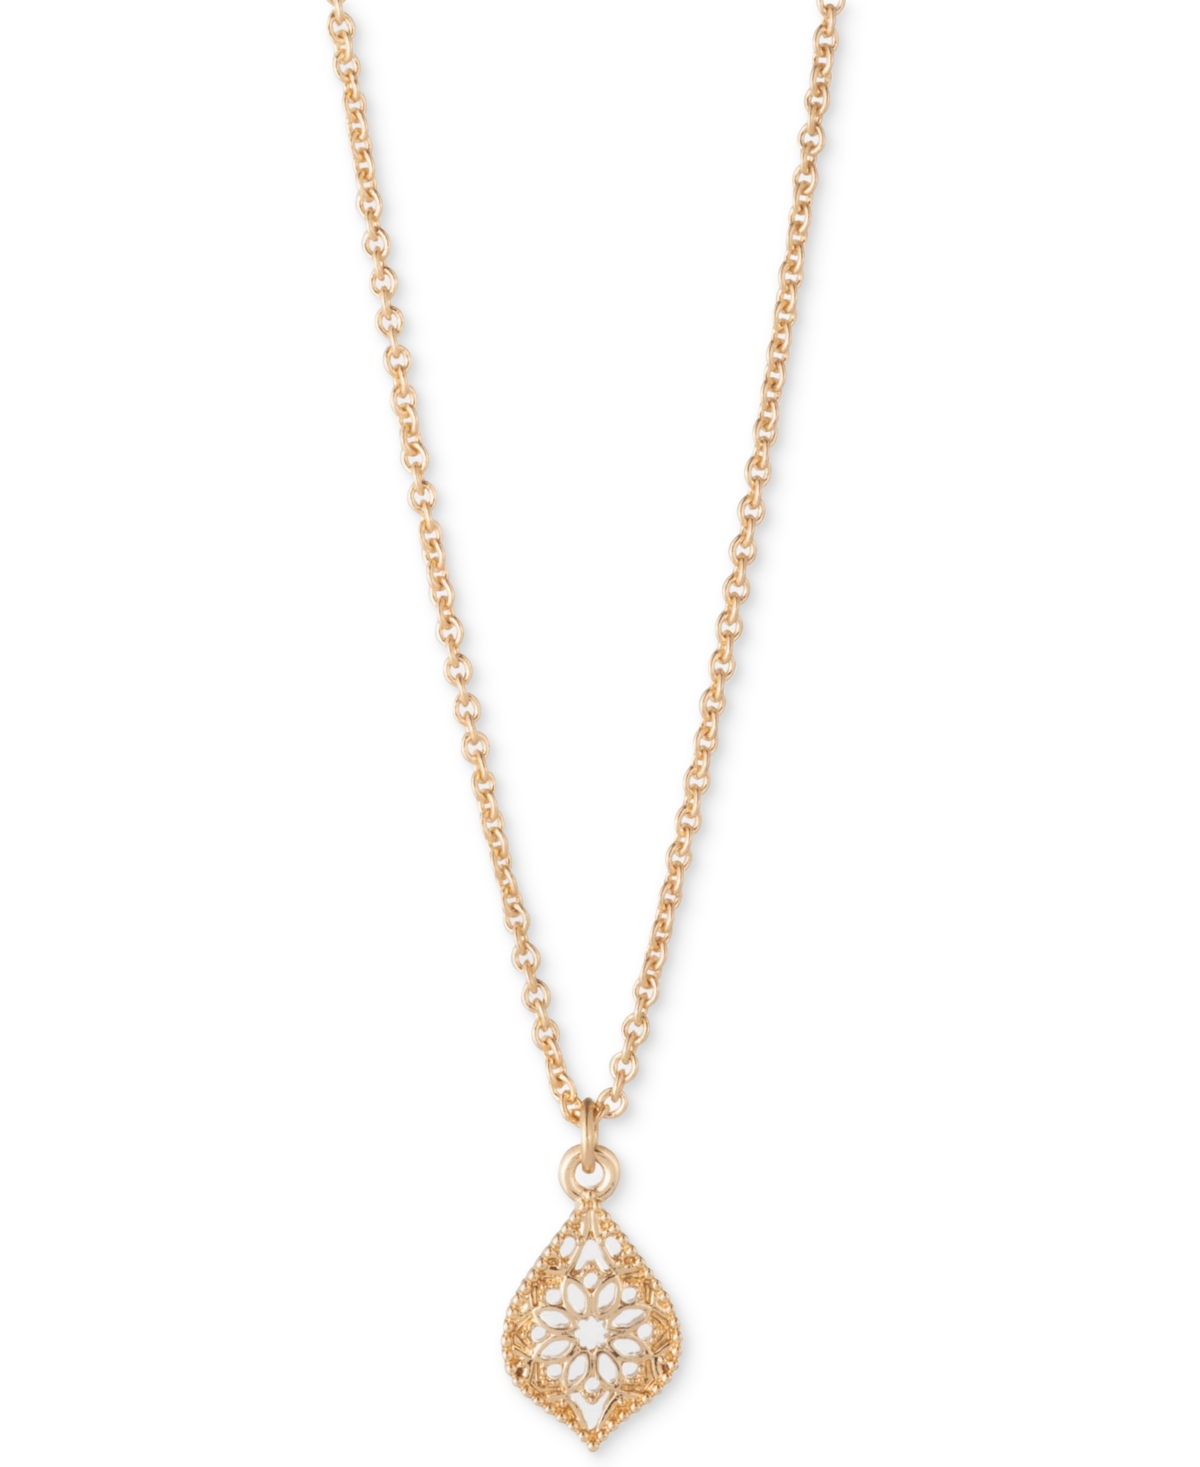 Gold-Tone Filigree Pendant Necklace, 16" + 3" extender - Gold